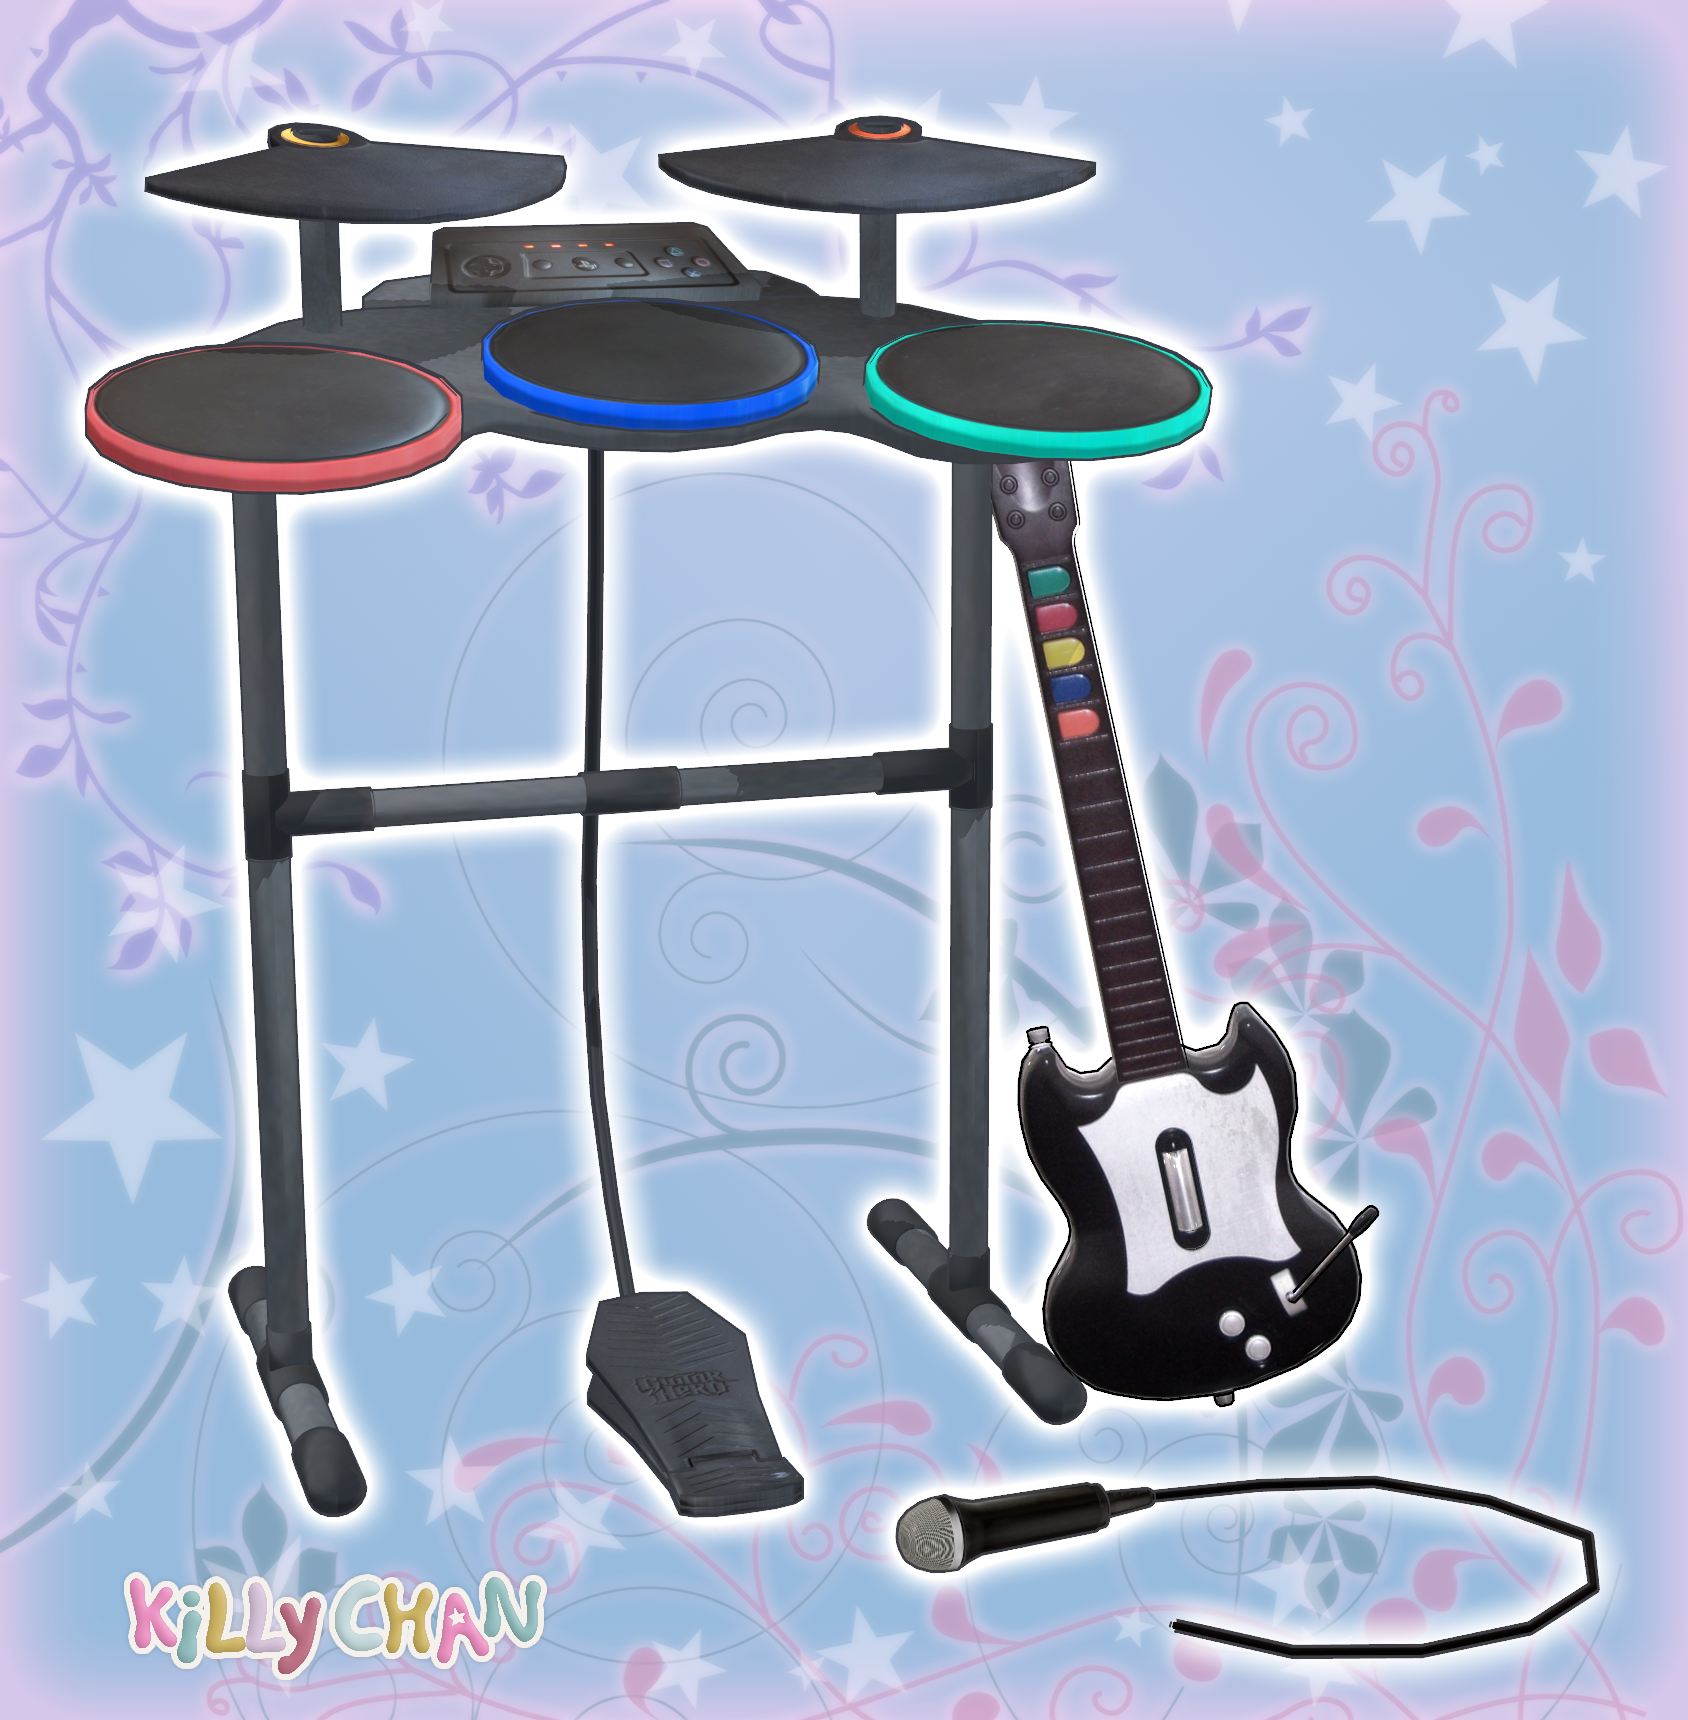 MMD] Guitar Hero Instruments Pack + Premium DL by kilaroka on DeviantArt